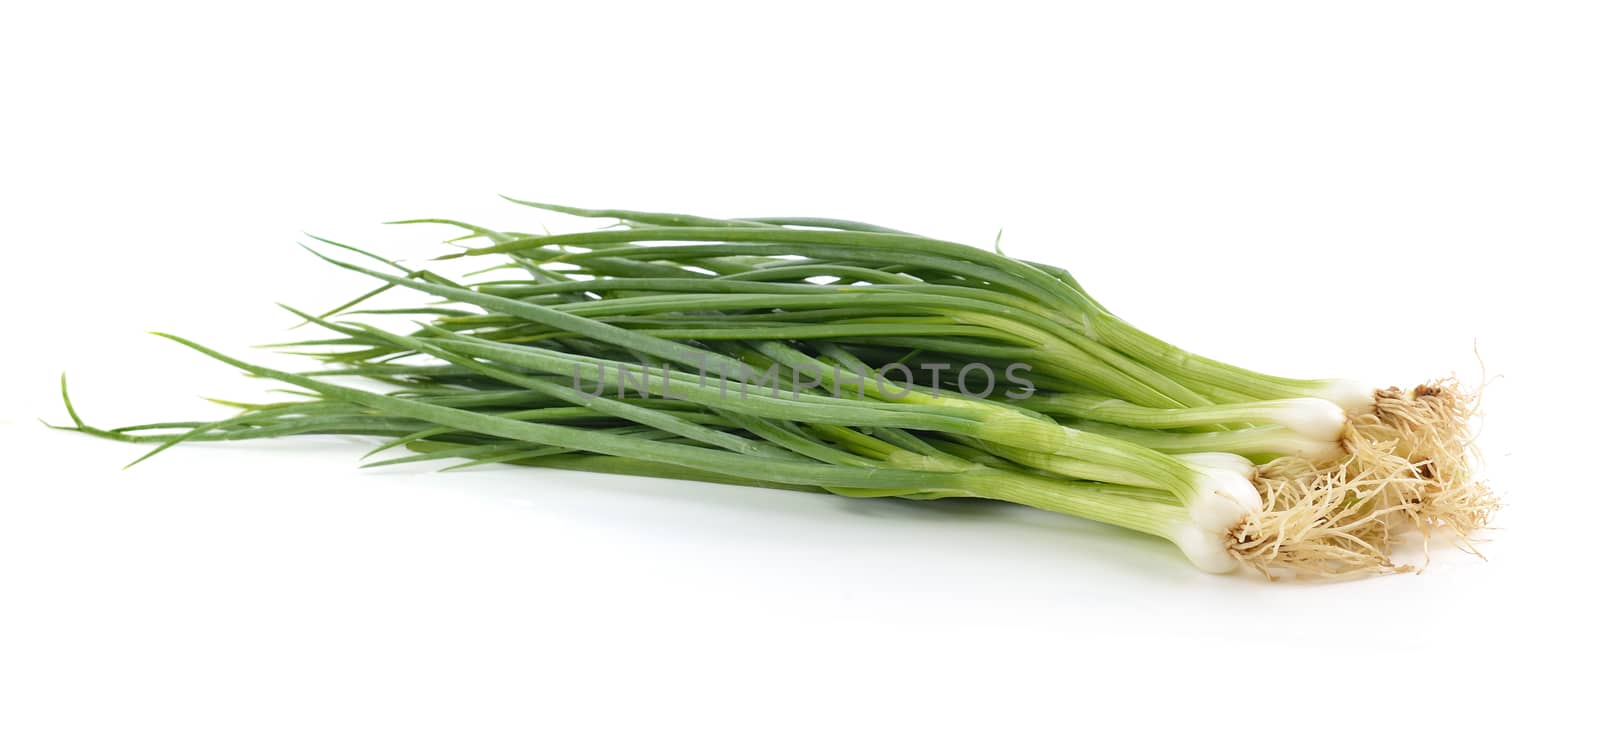 Green Onion on white background